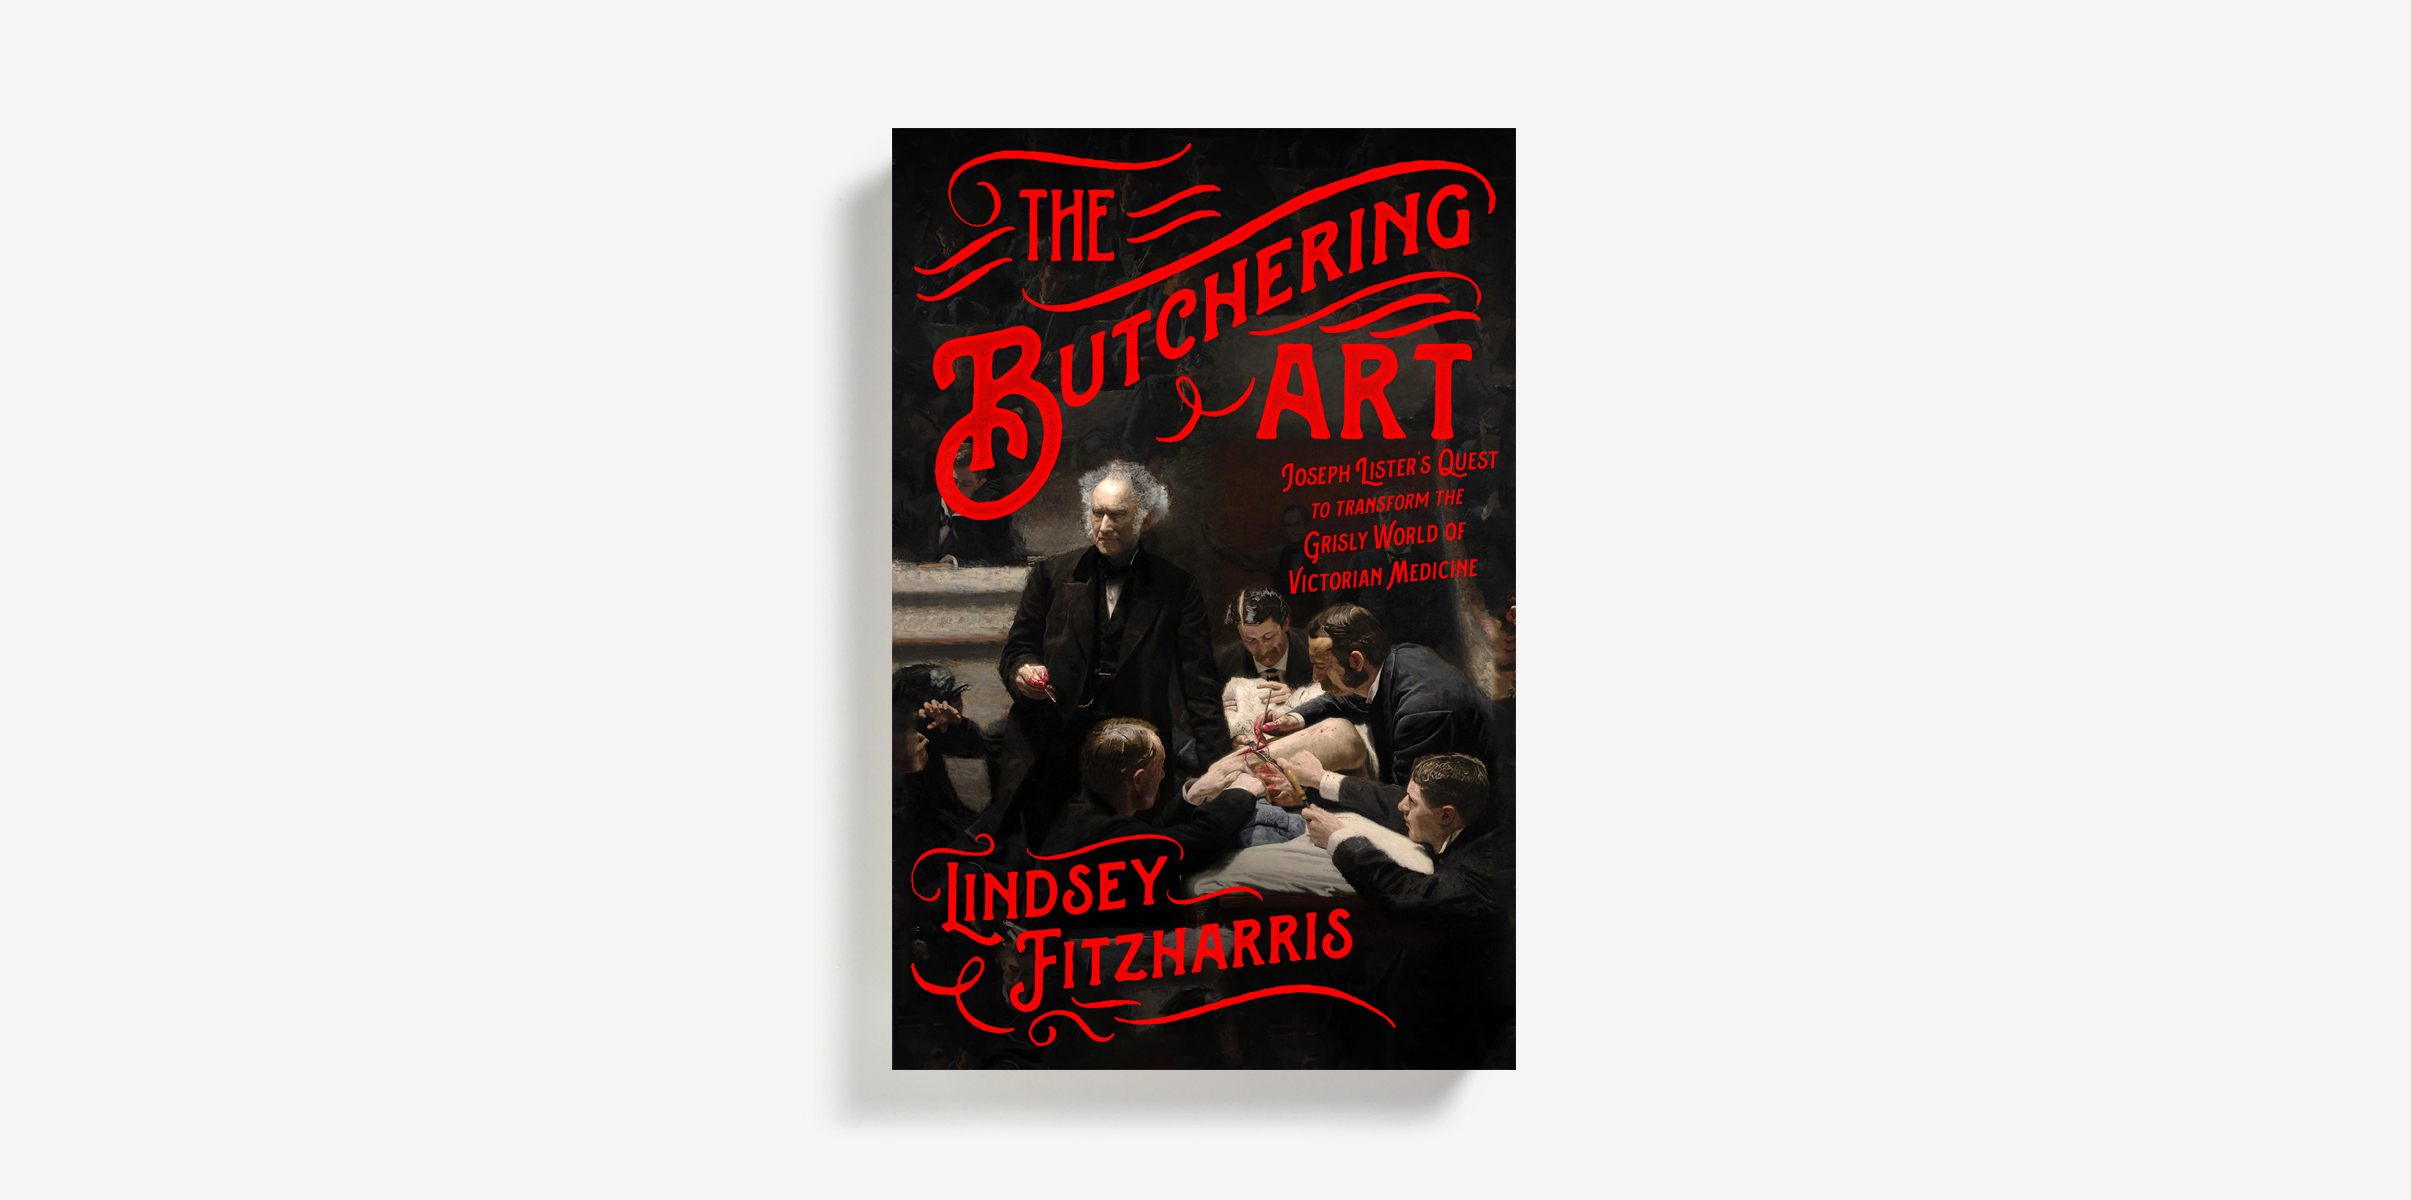 the butchering art hardcover